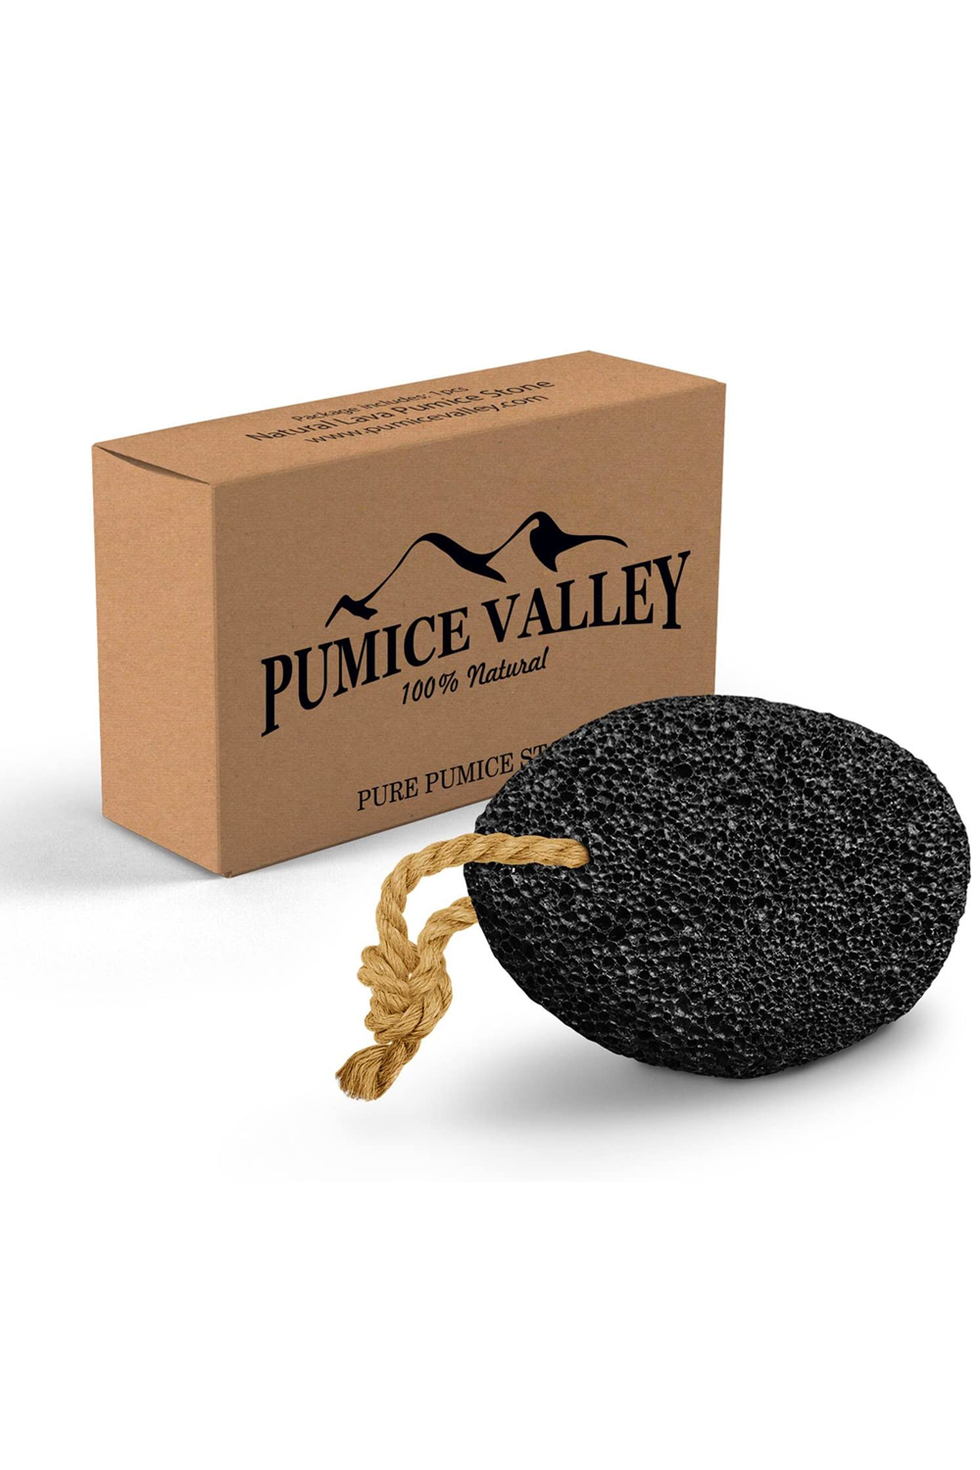 Pumice Valley Natural Earth Lava Pumice Stone Black